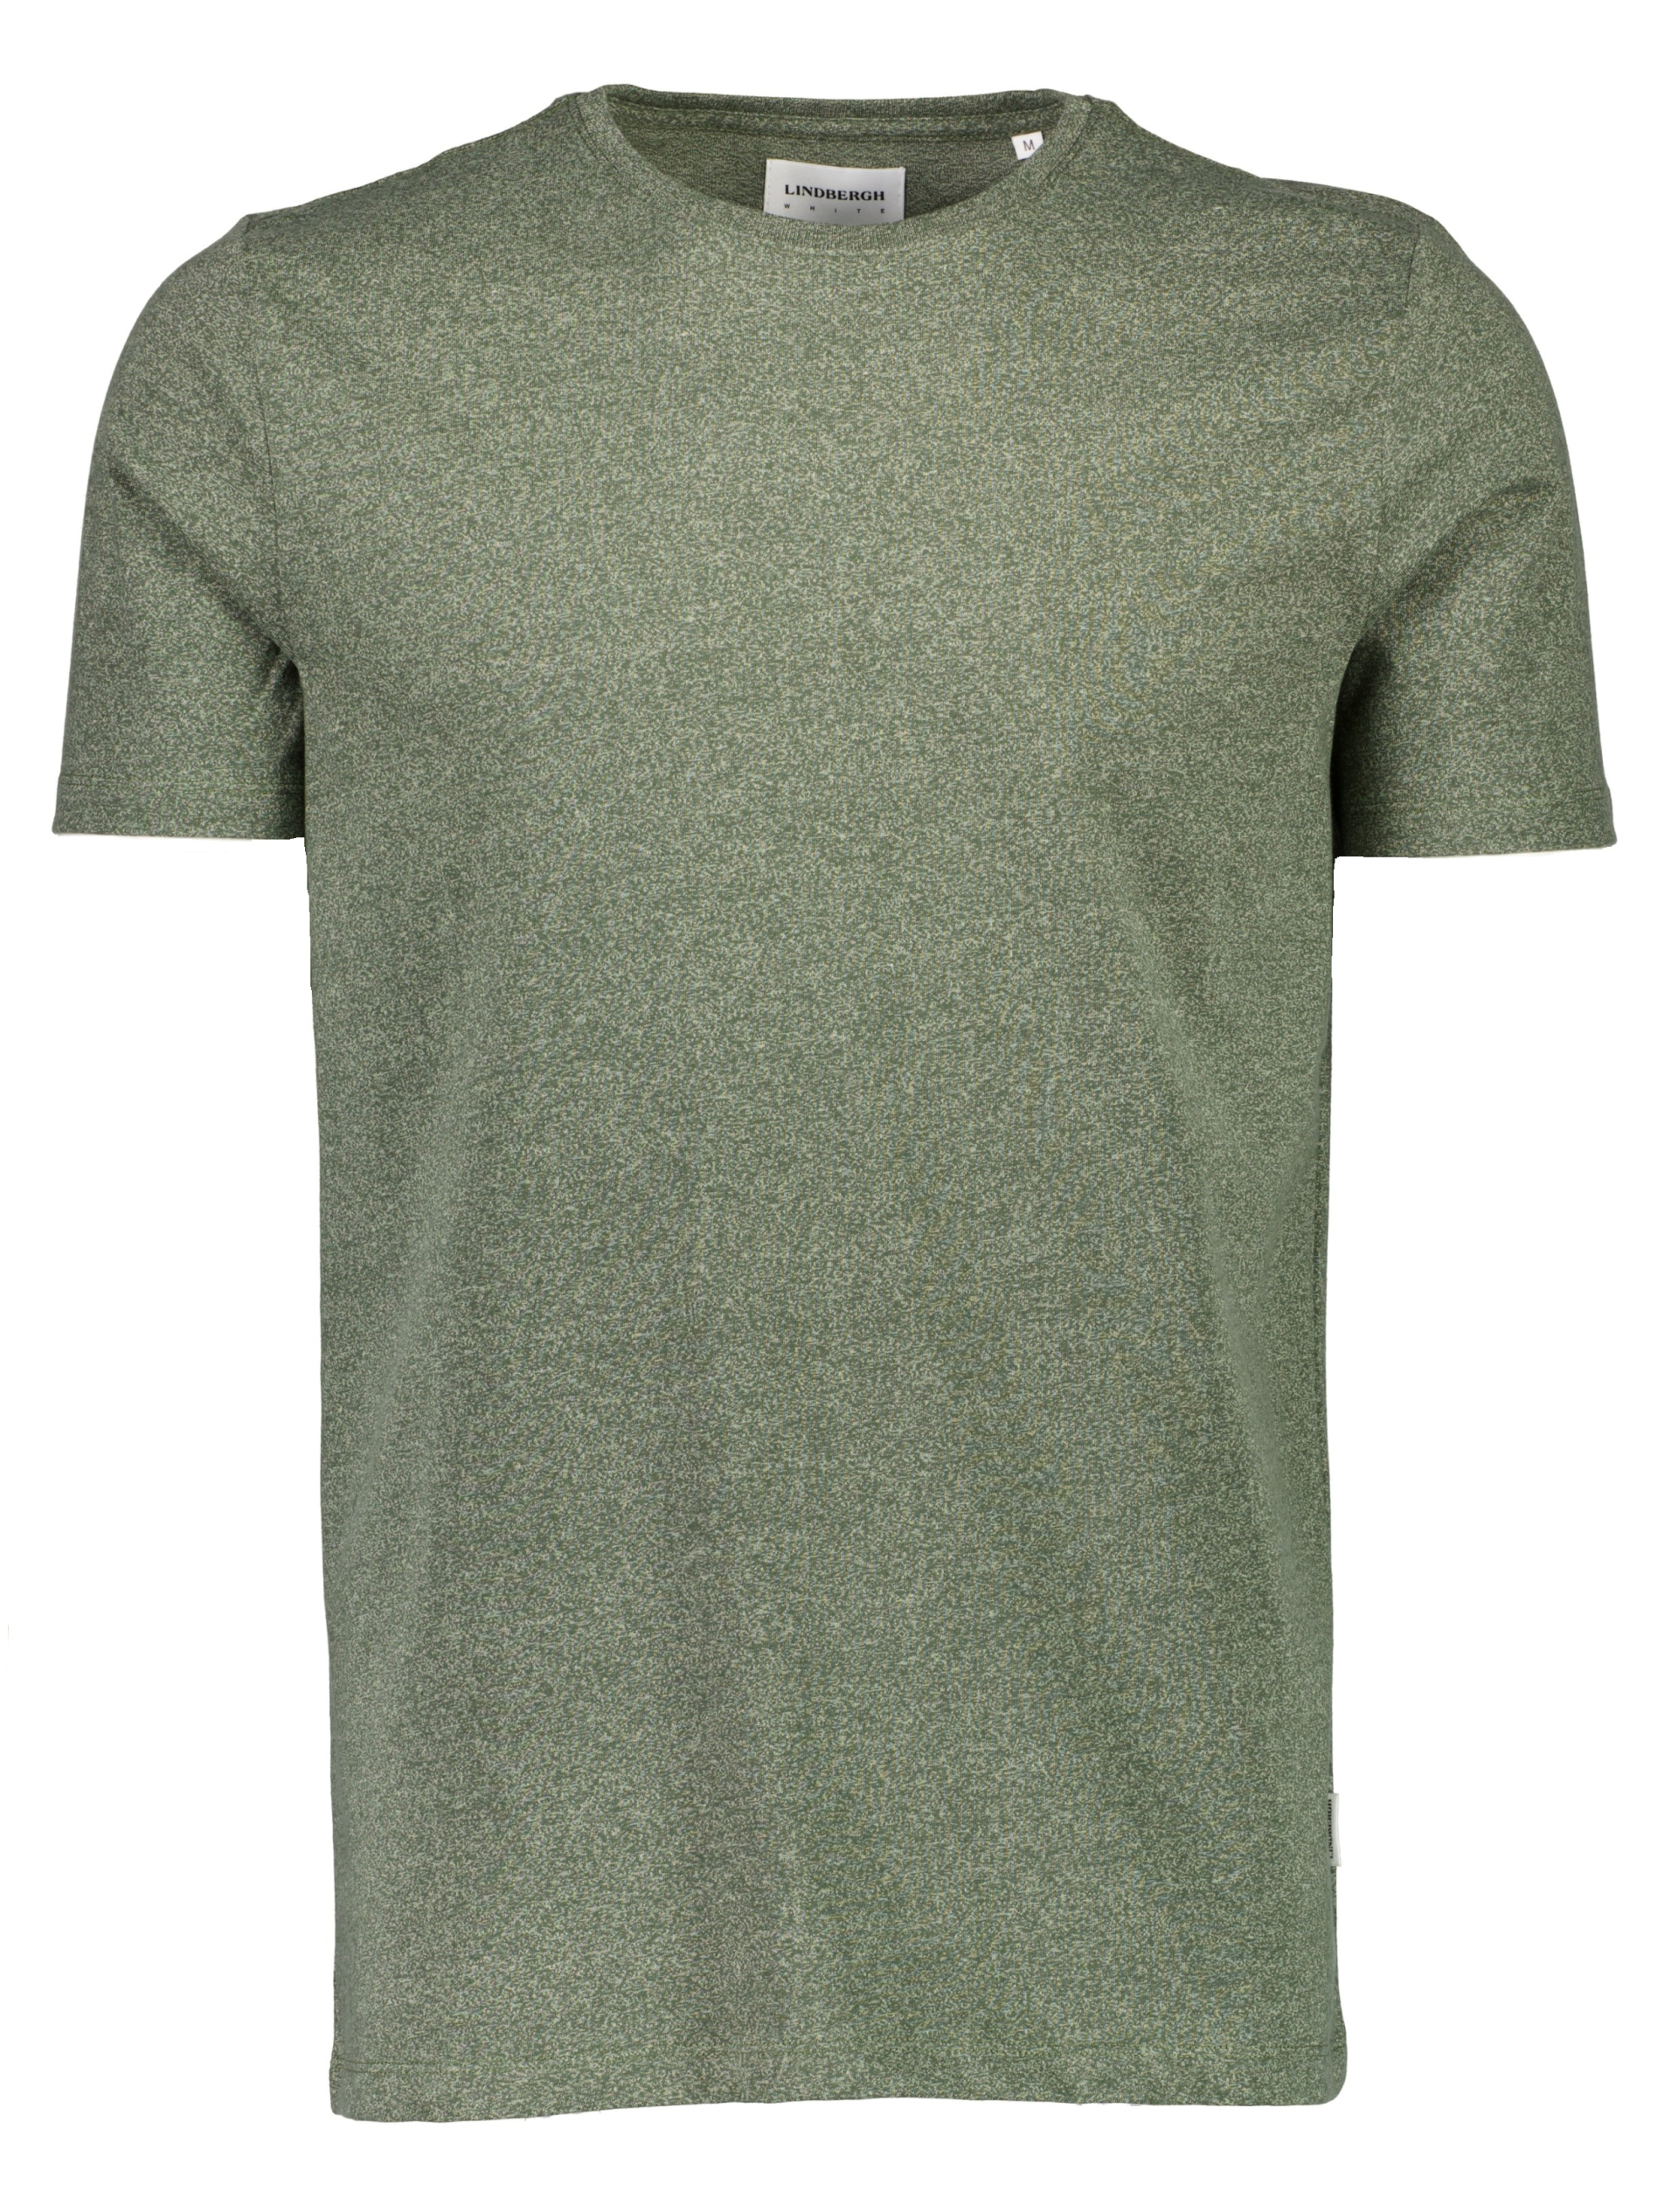 Lindbergh T-shirt grön / dusty army mix